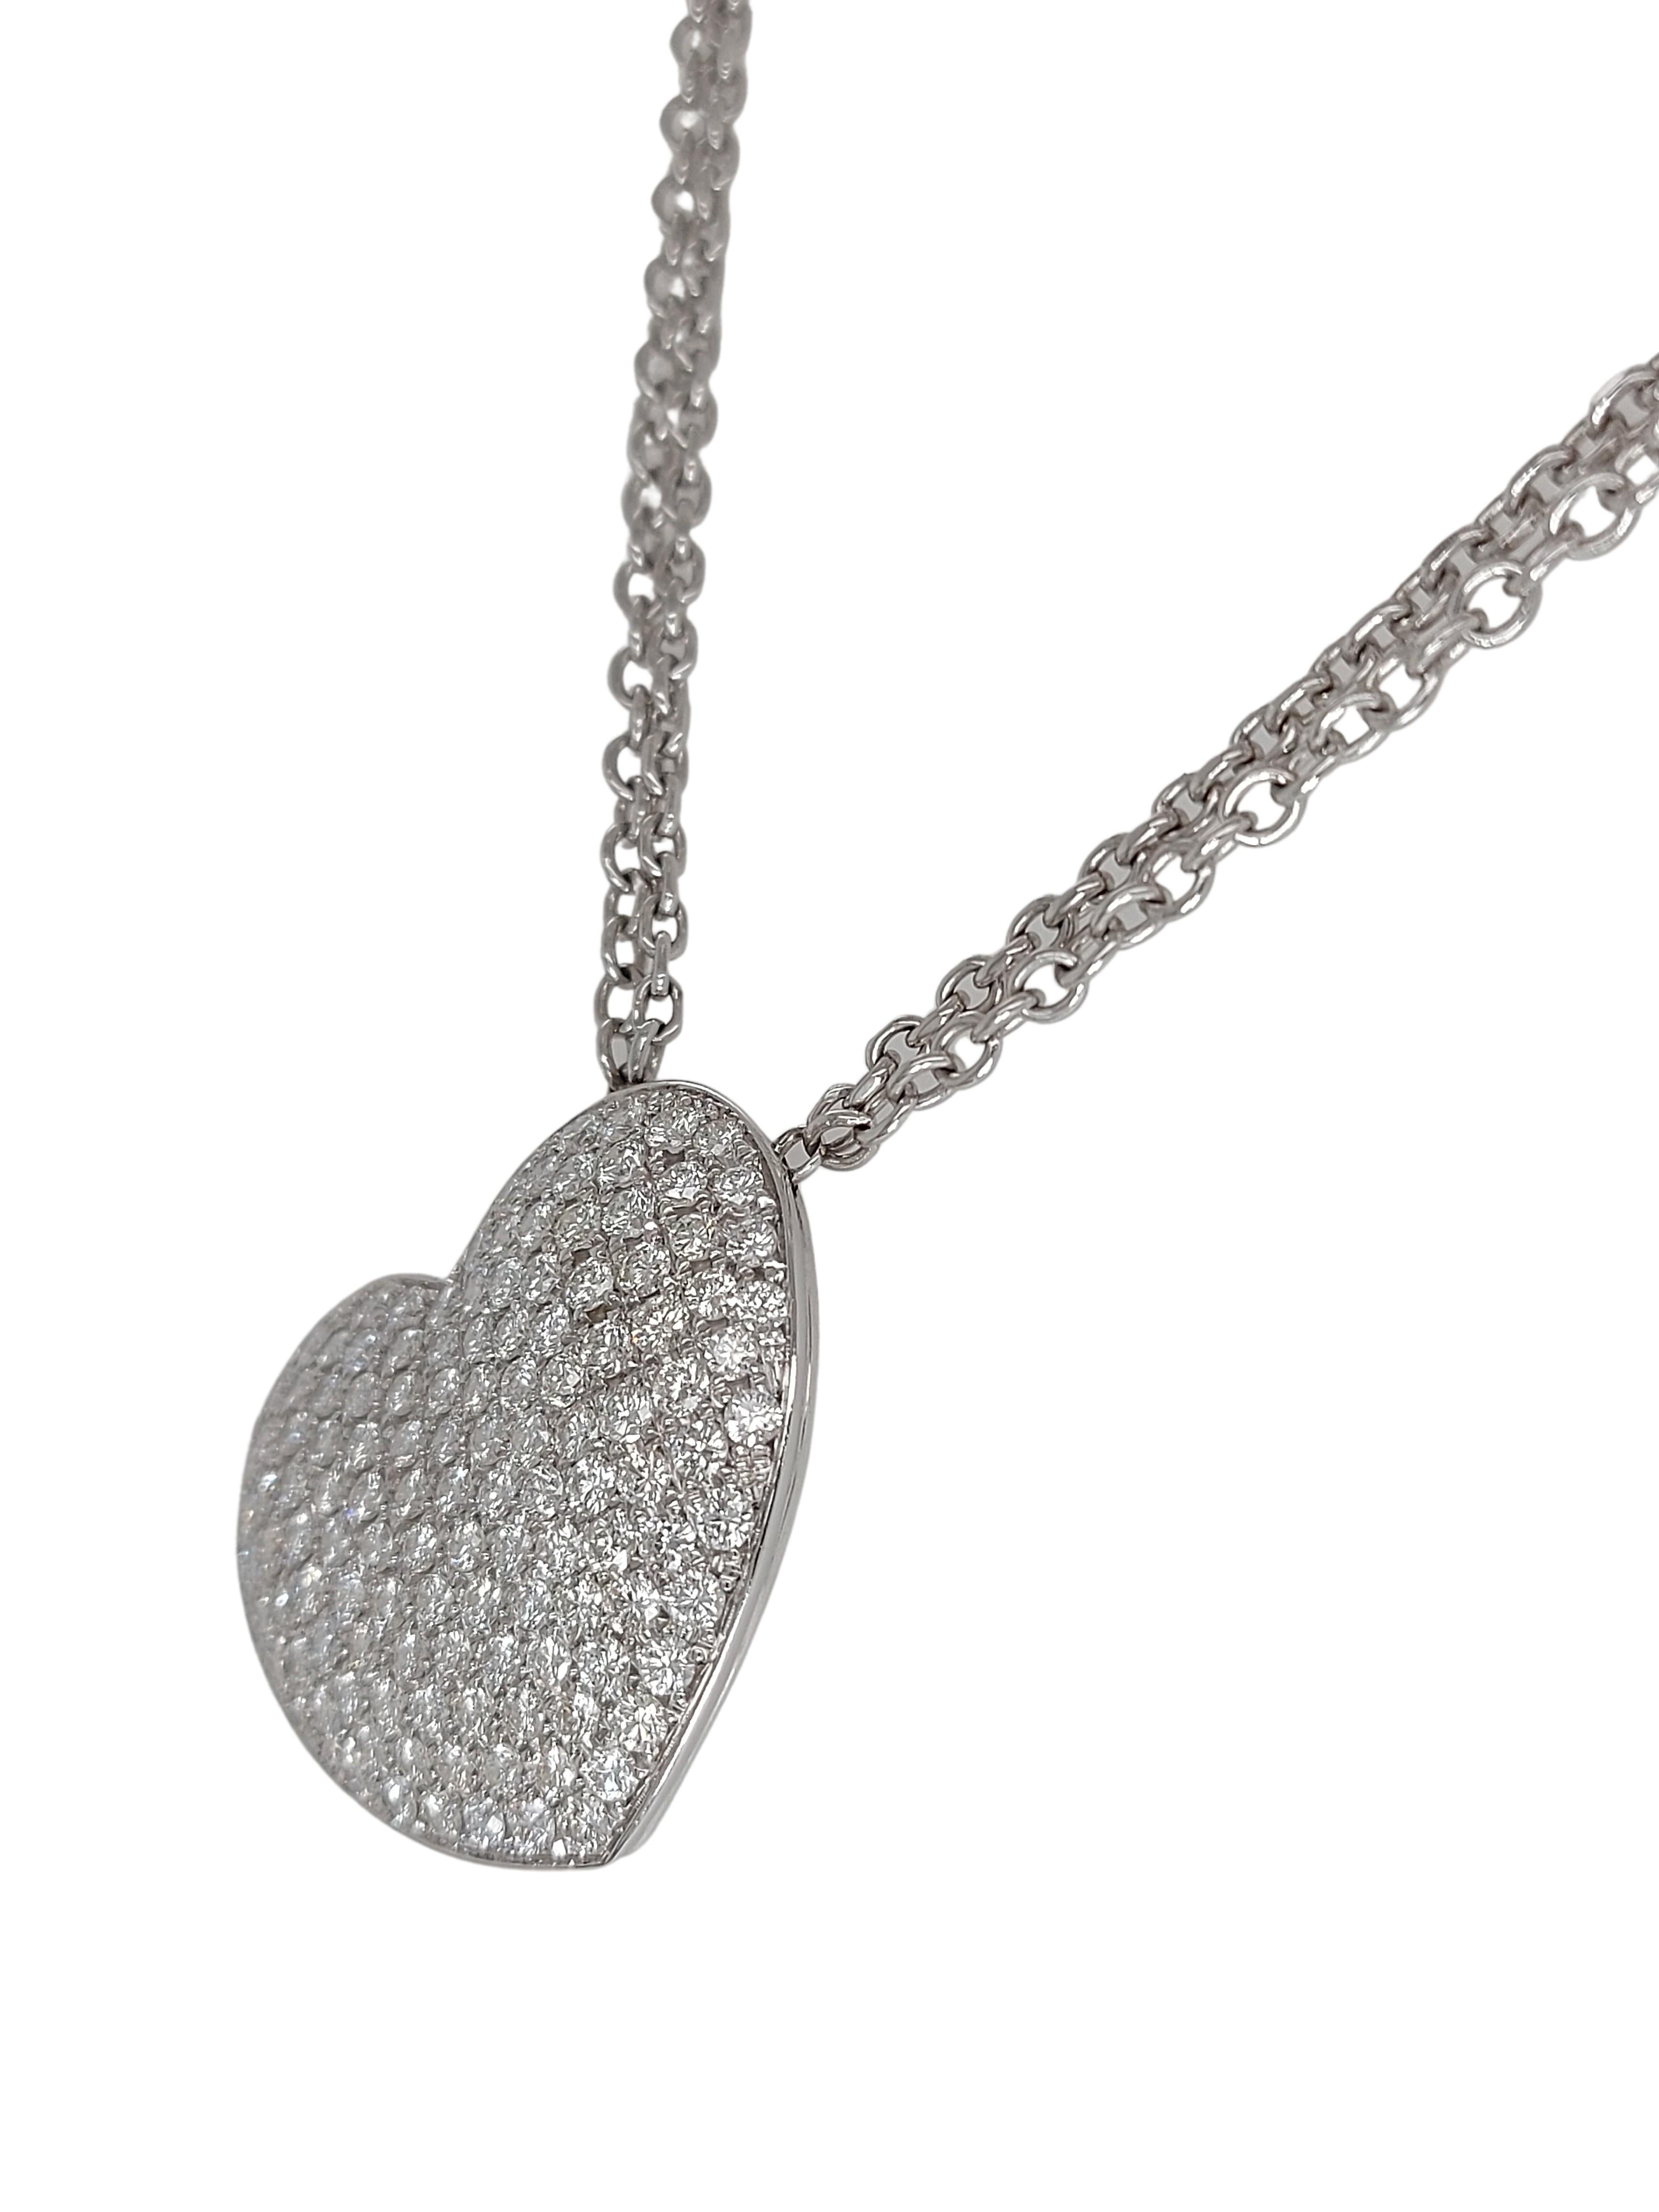 Modern 18kt White Gold Heart Shape Necklace with 4.96 Ct.Brilliant Cut Diamonds Pavé